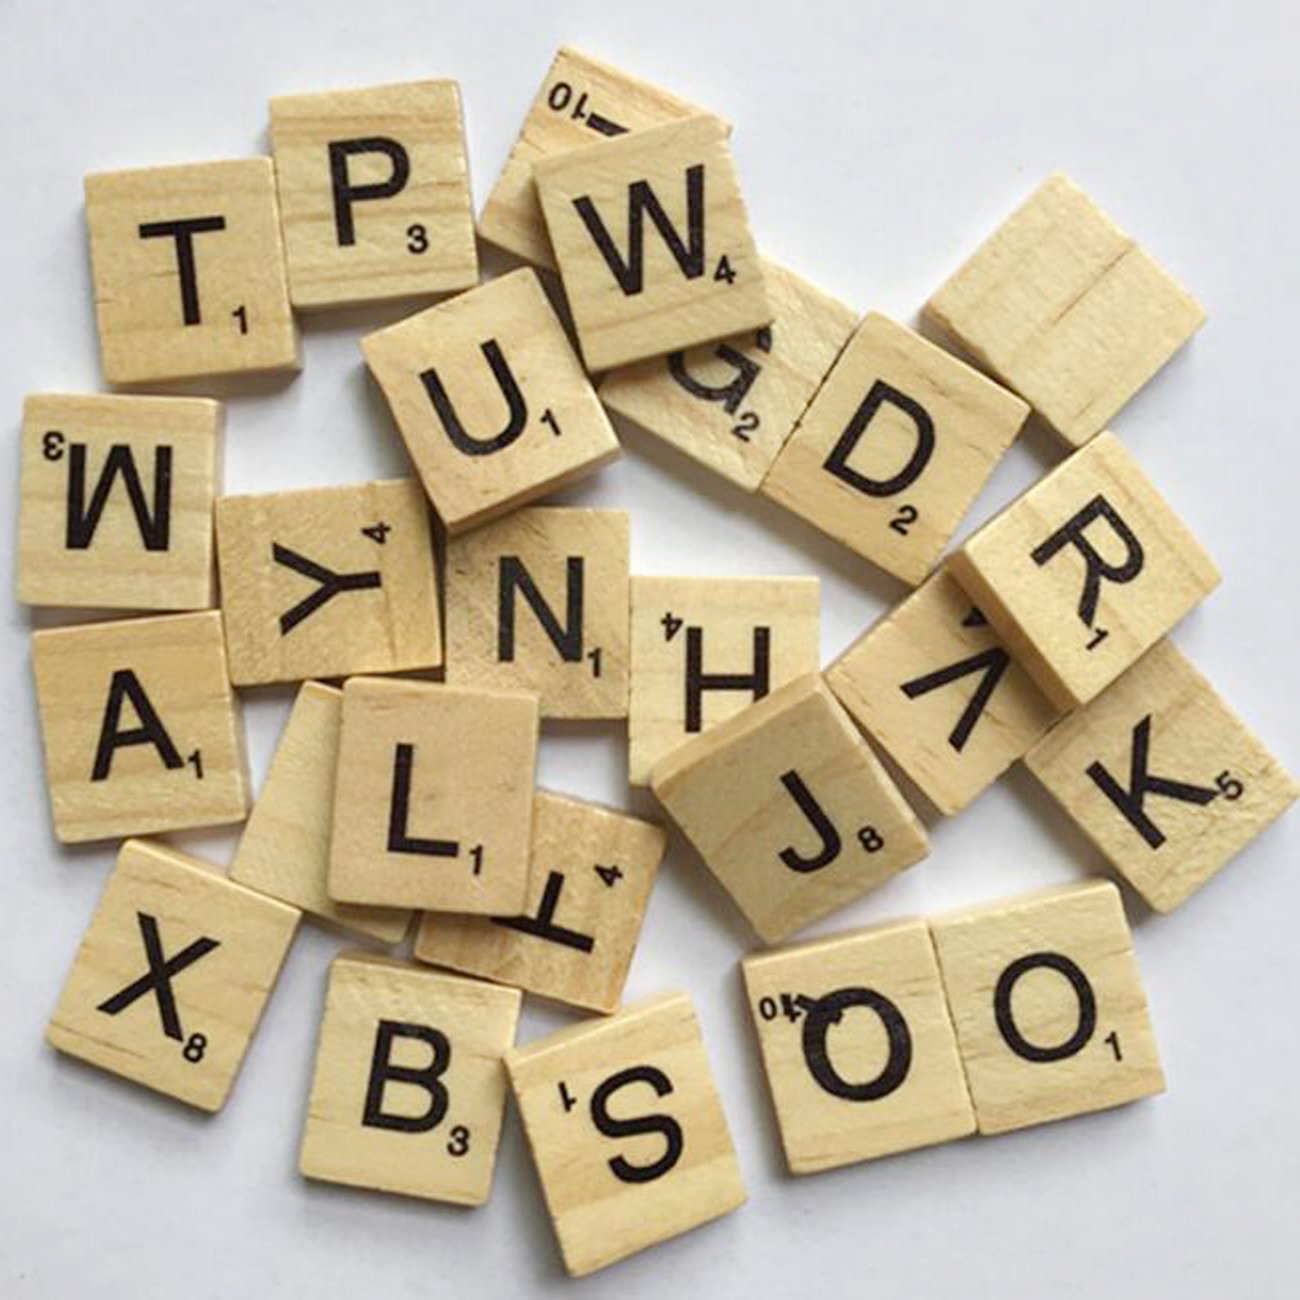 Sunnyglade 500PCS Wood Letter Tiles/ Wooden Scrabble Tiles A-Z Capital Letters for Crafts, Pendants, Spelling